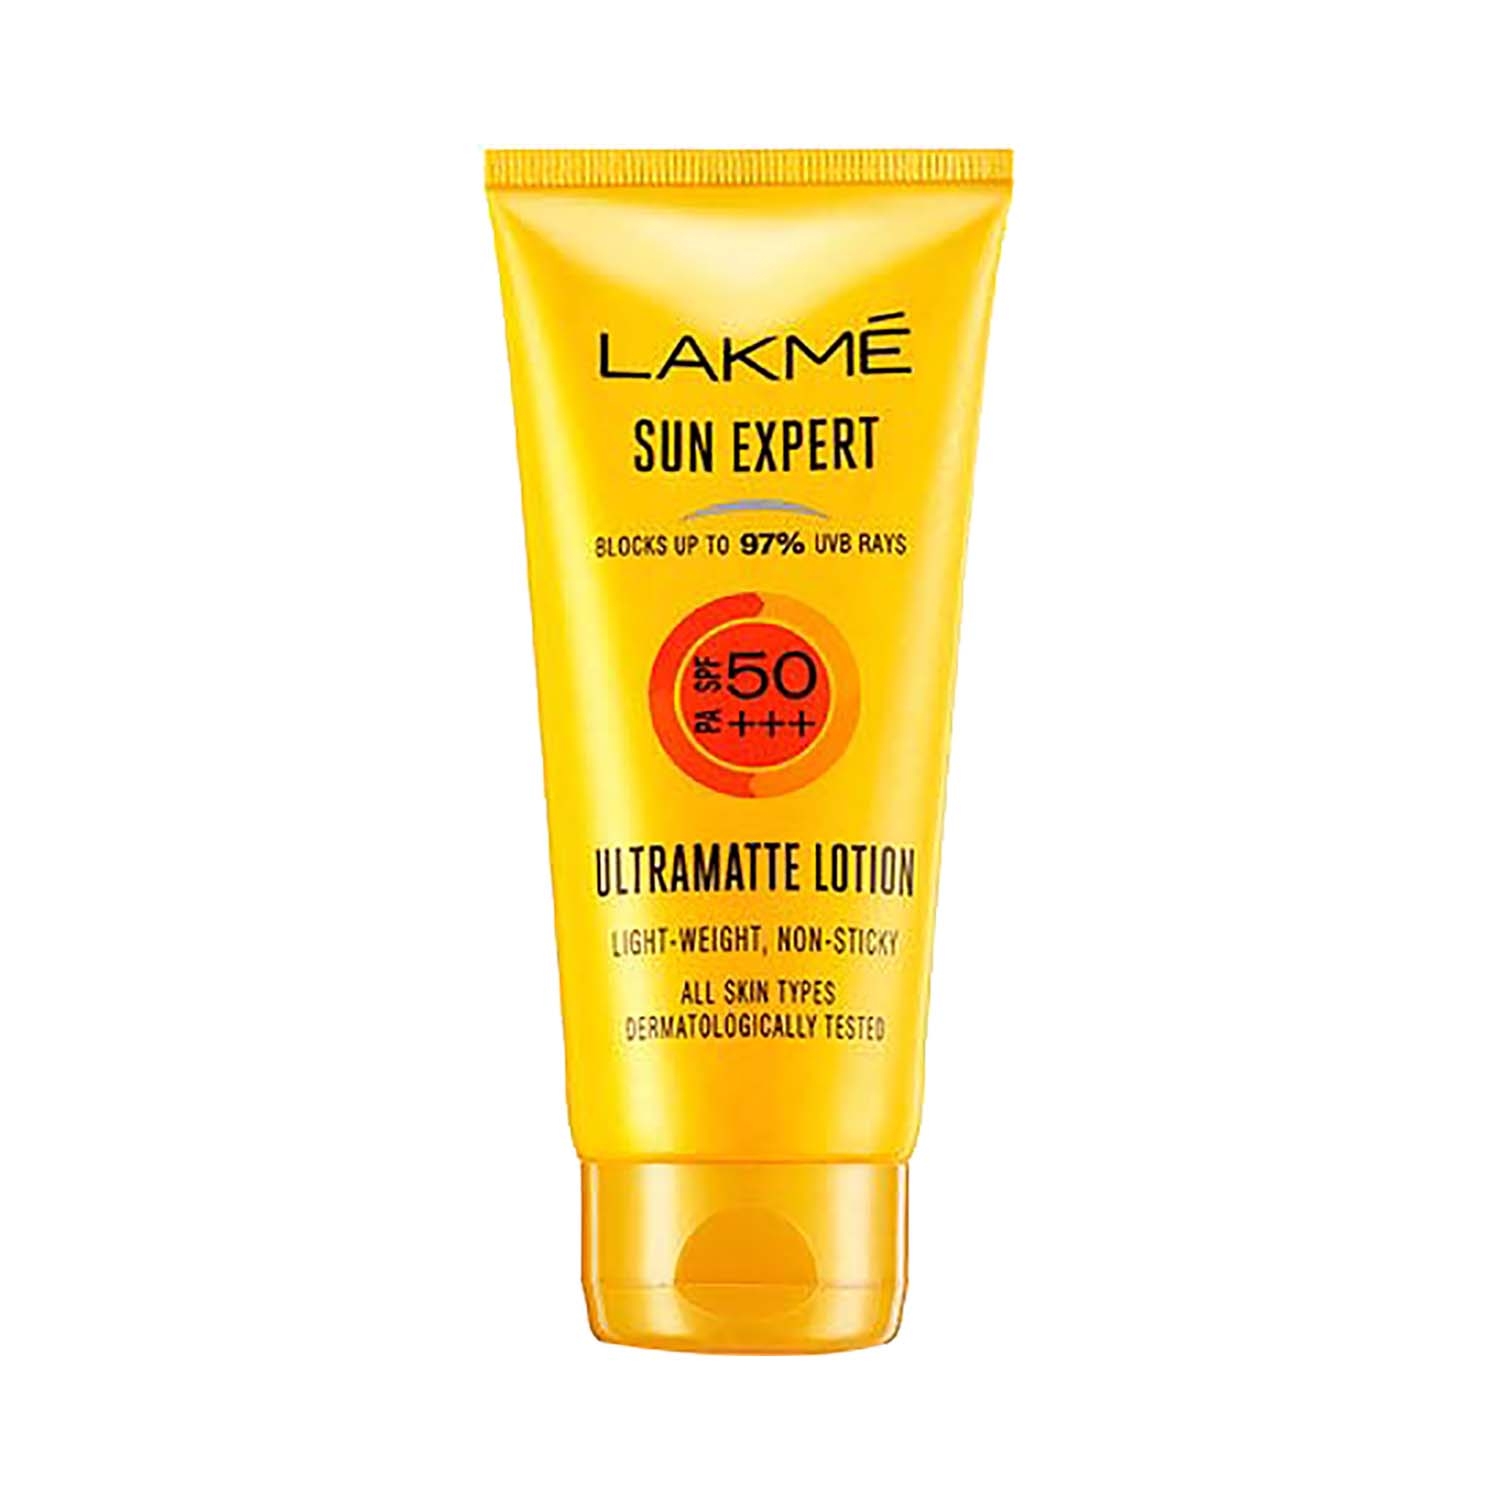 Lakme | Lakme Sun Expert SPF 50 PA+++ Ultra Matte Lotion (100ml)